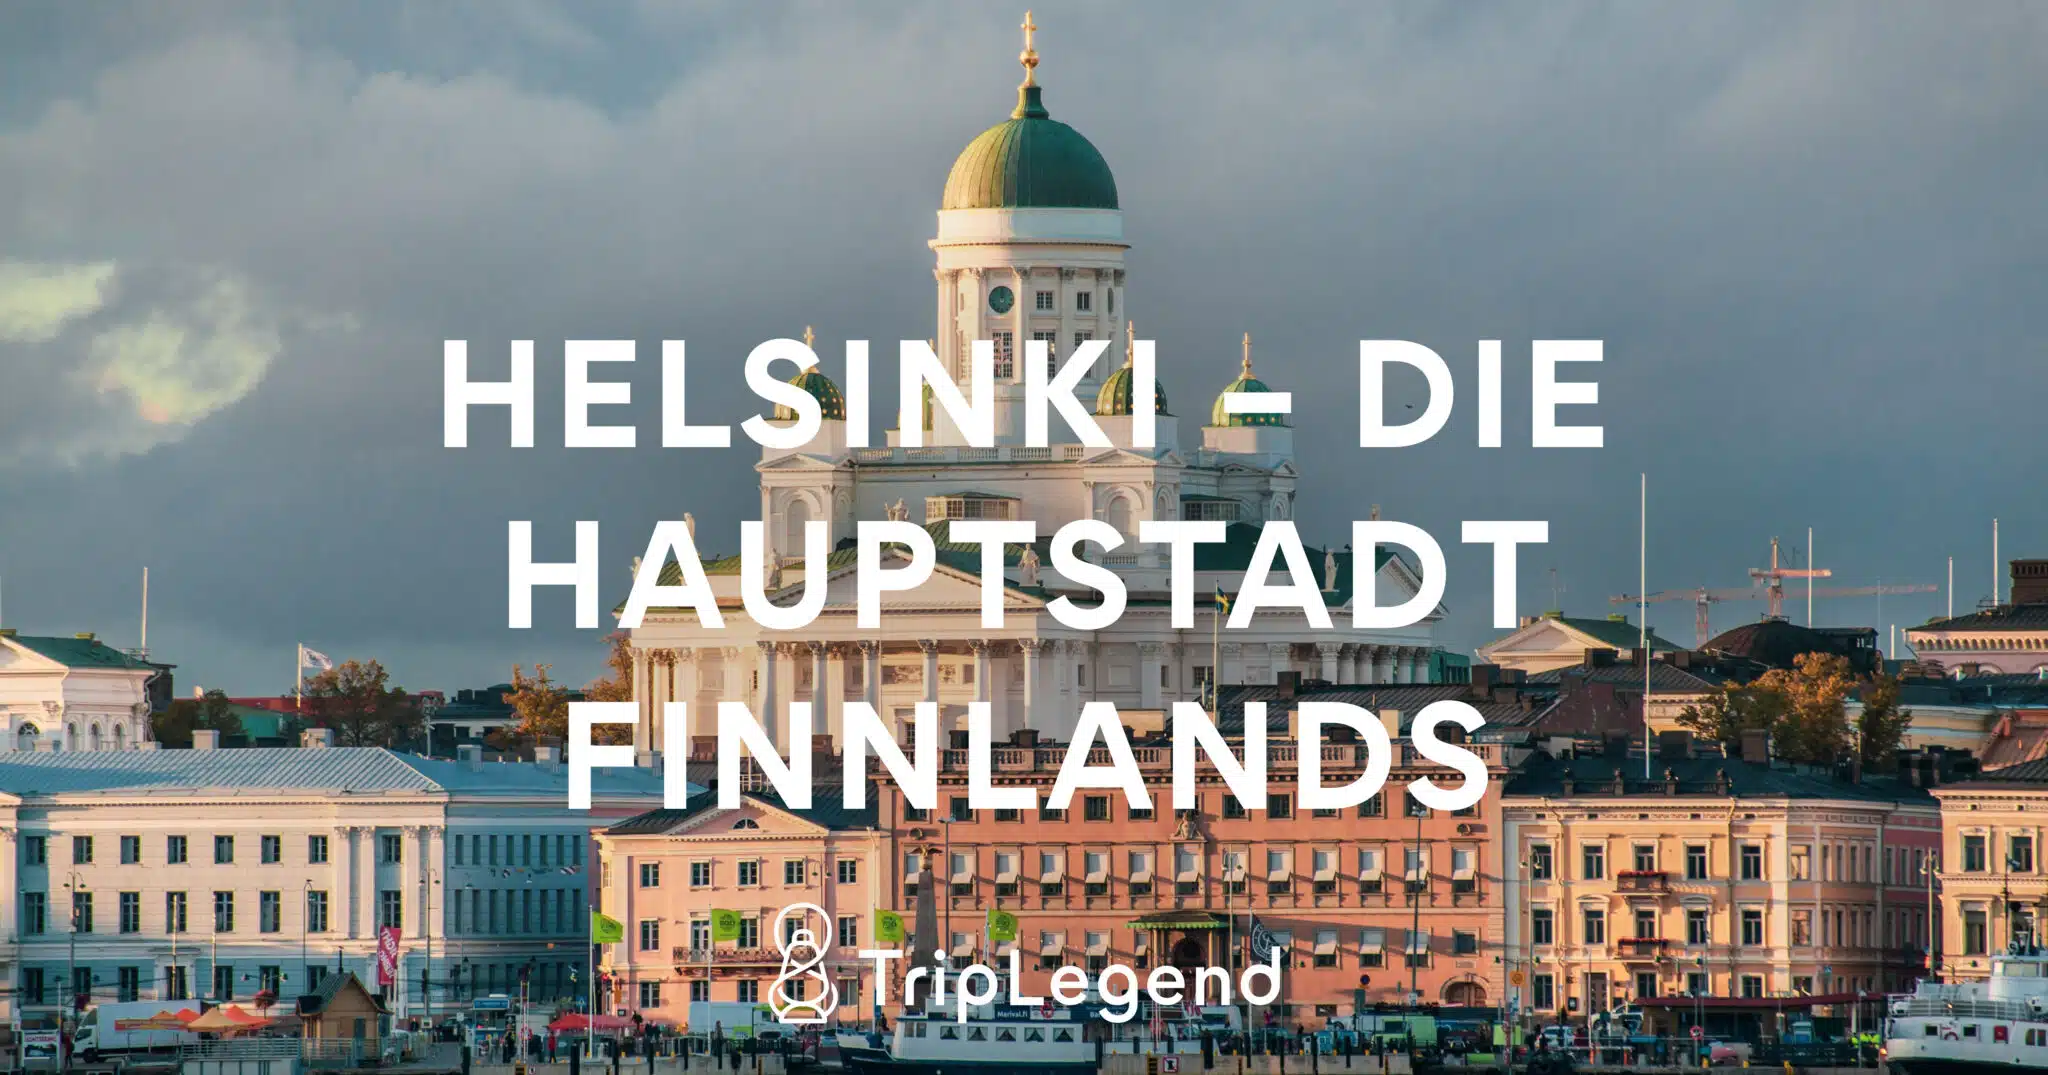 Helsinki - La capitale della Finlandia1 in scala.jpg